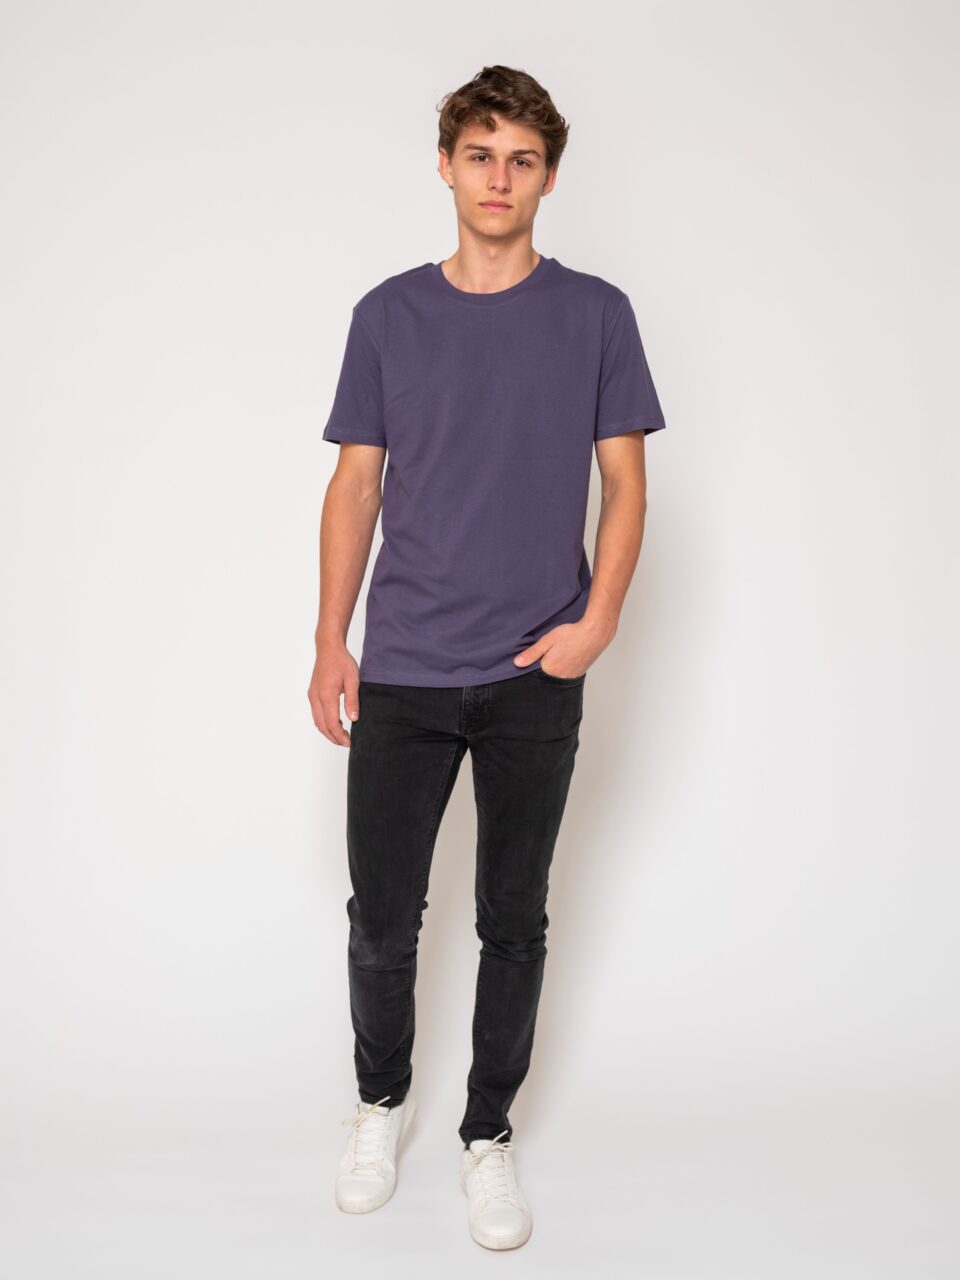 STROM_basic collection_deep purple_shirt.